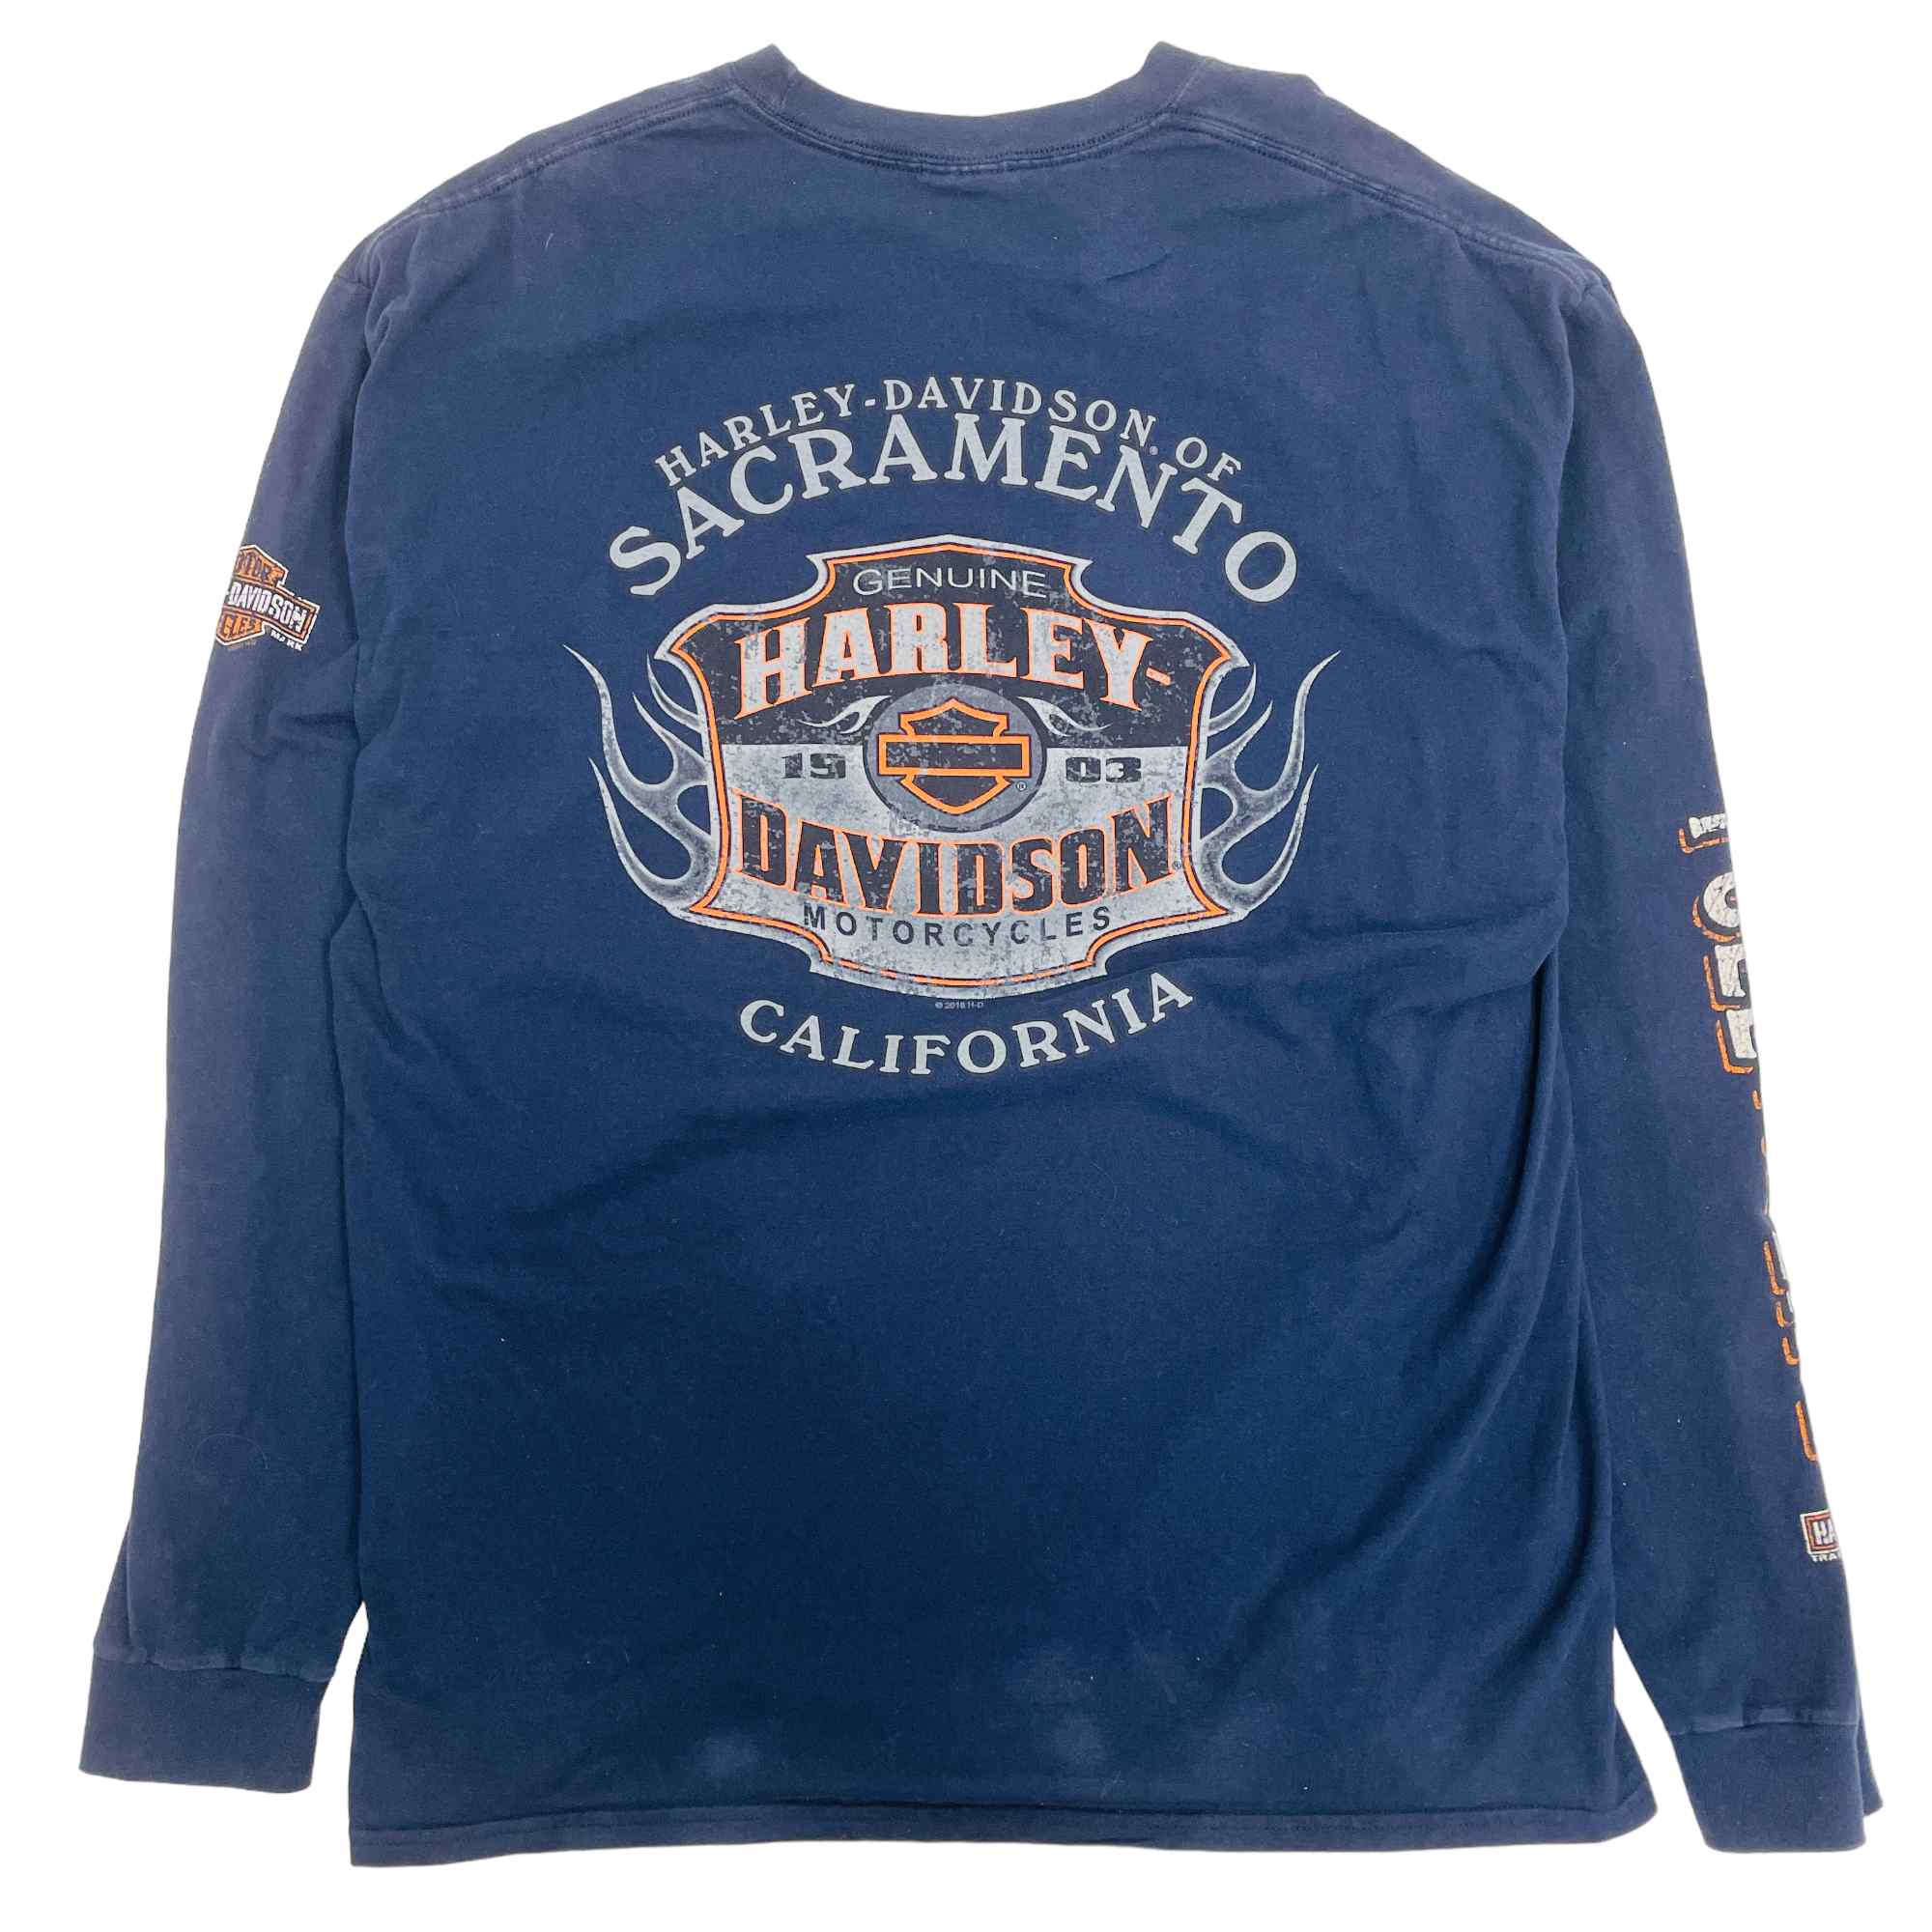 "Sacramento' Harley Davidson Long Sleeve T-Shirt - 2XL